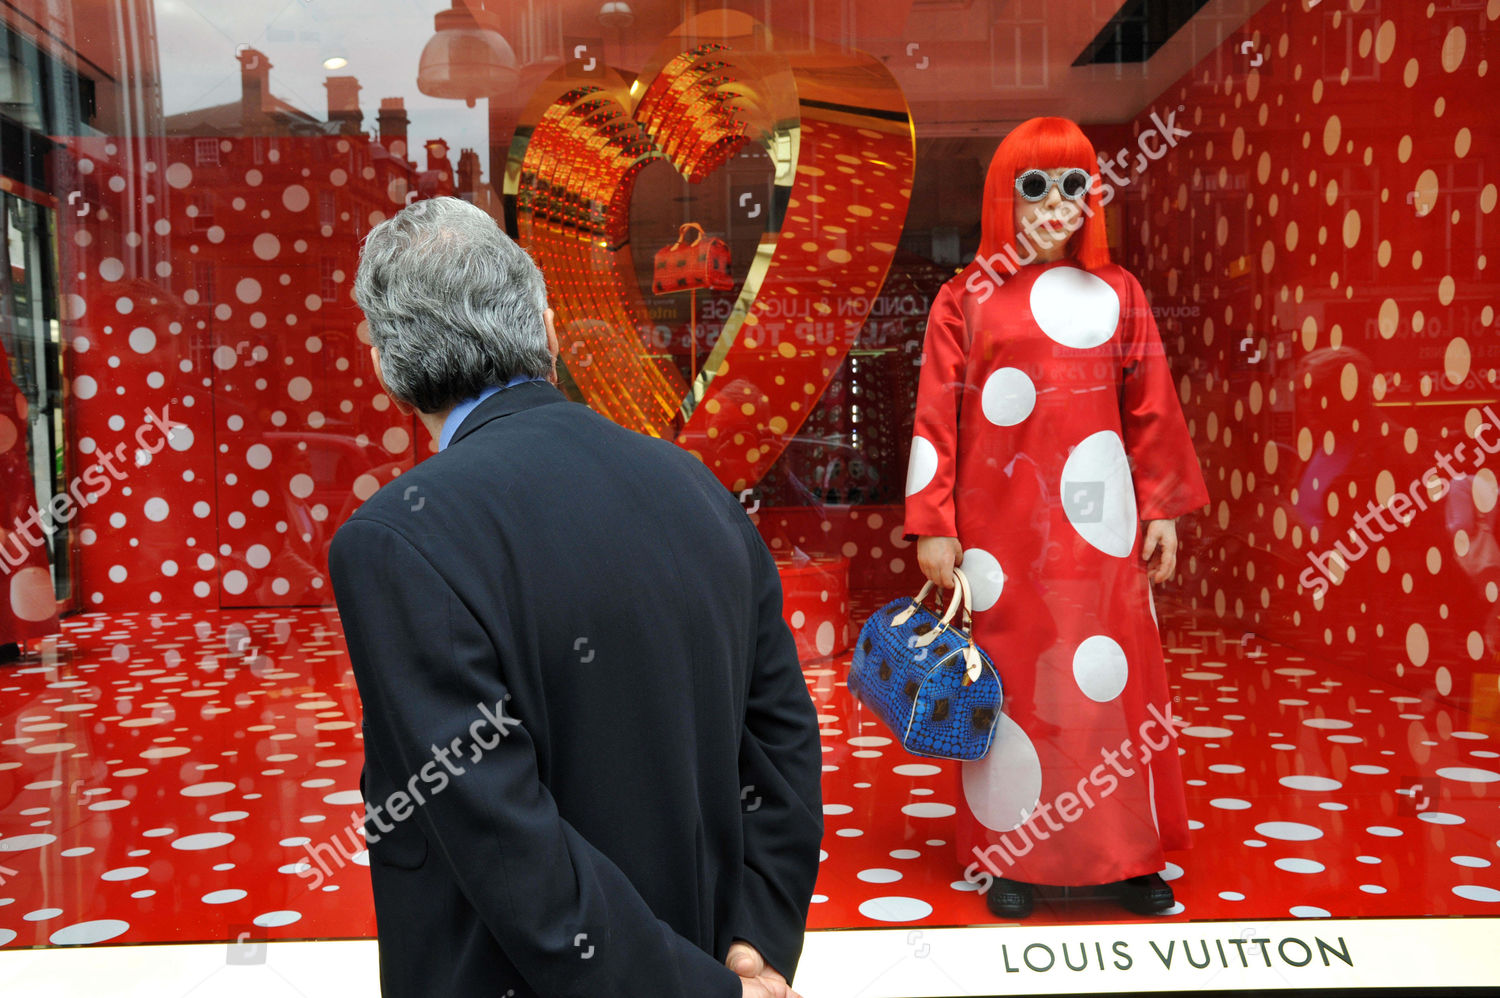 Yayoi Kusama for Louis Vuitton at Selfridges